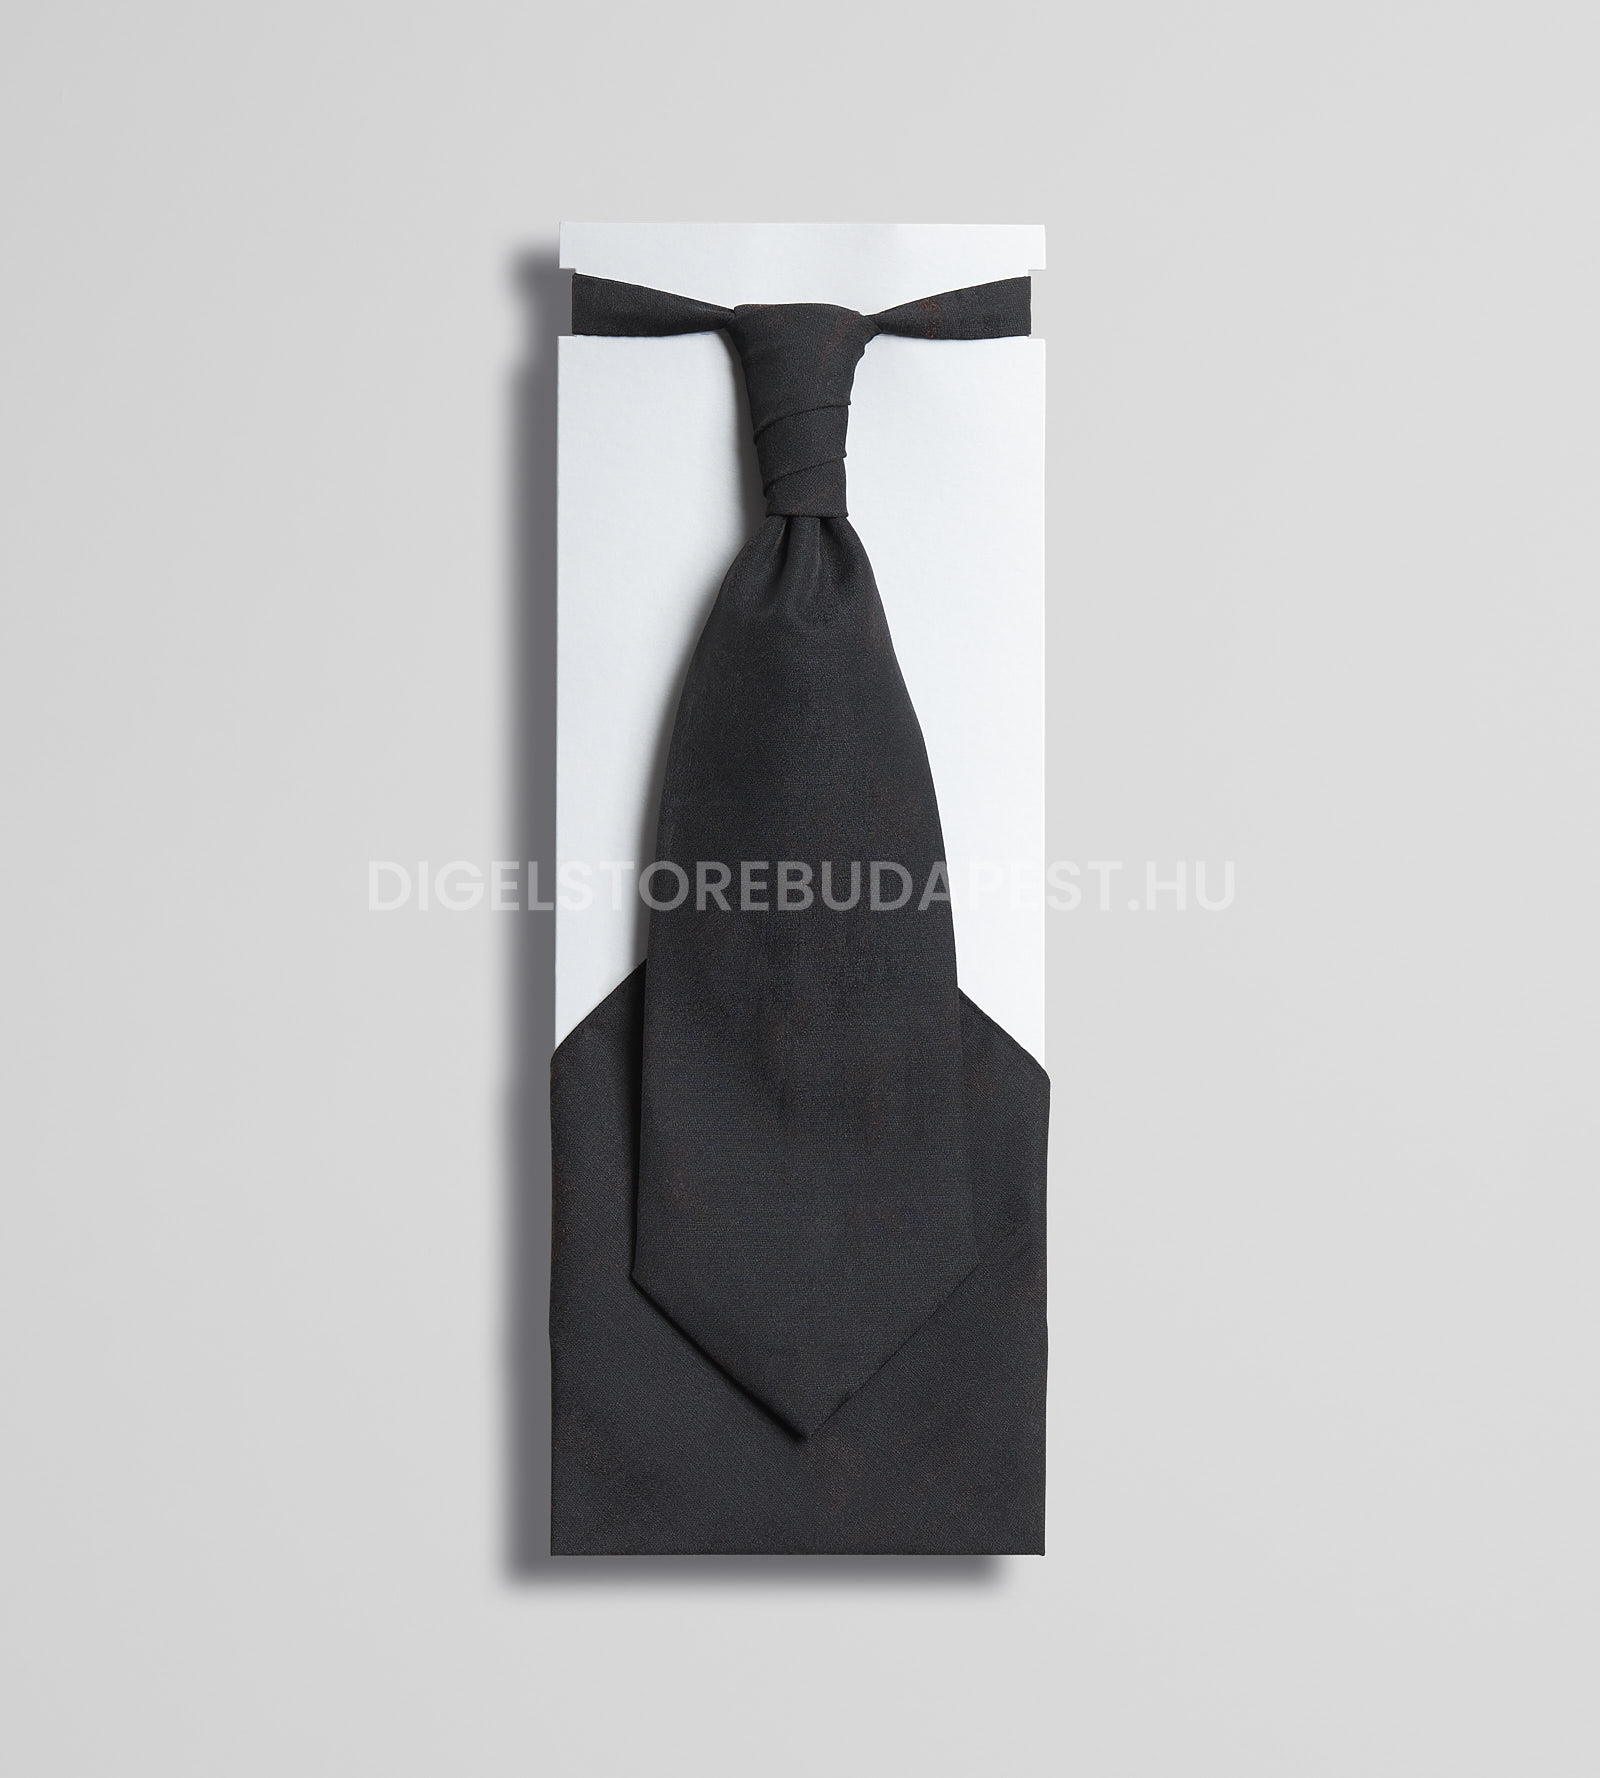 ceremony-fekete-francia-nyakkendo-diszzsebkendovel-loy-1120988-10-01